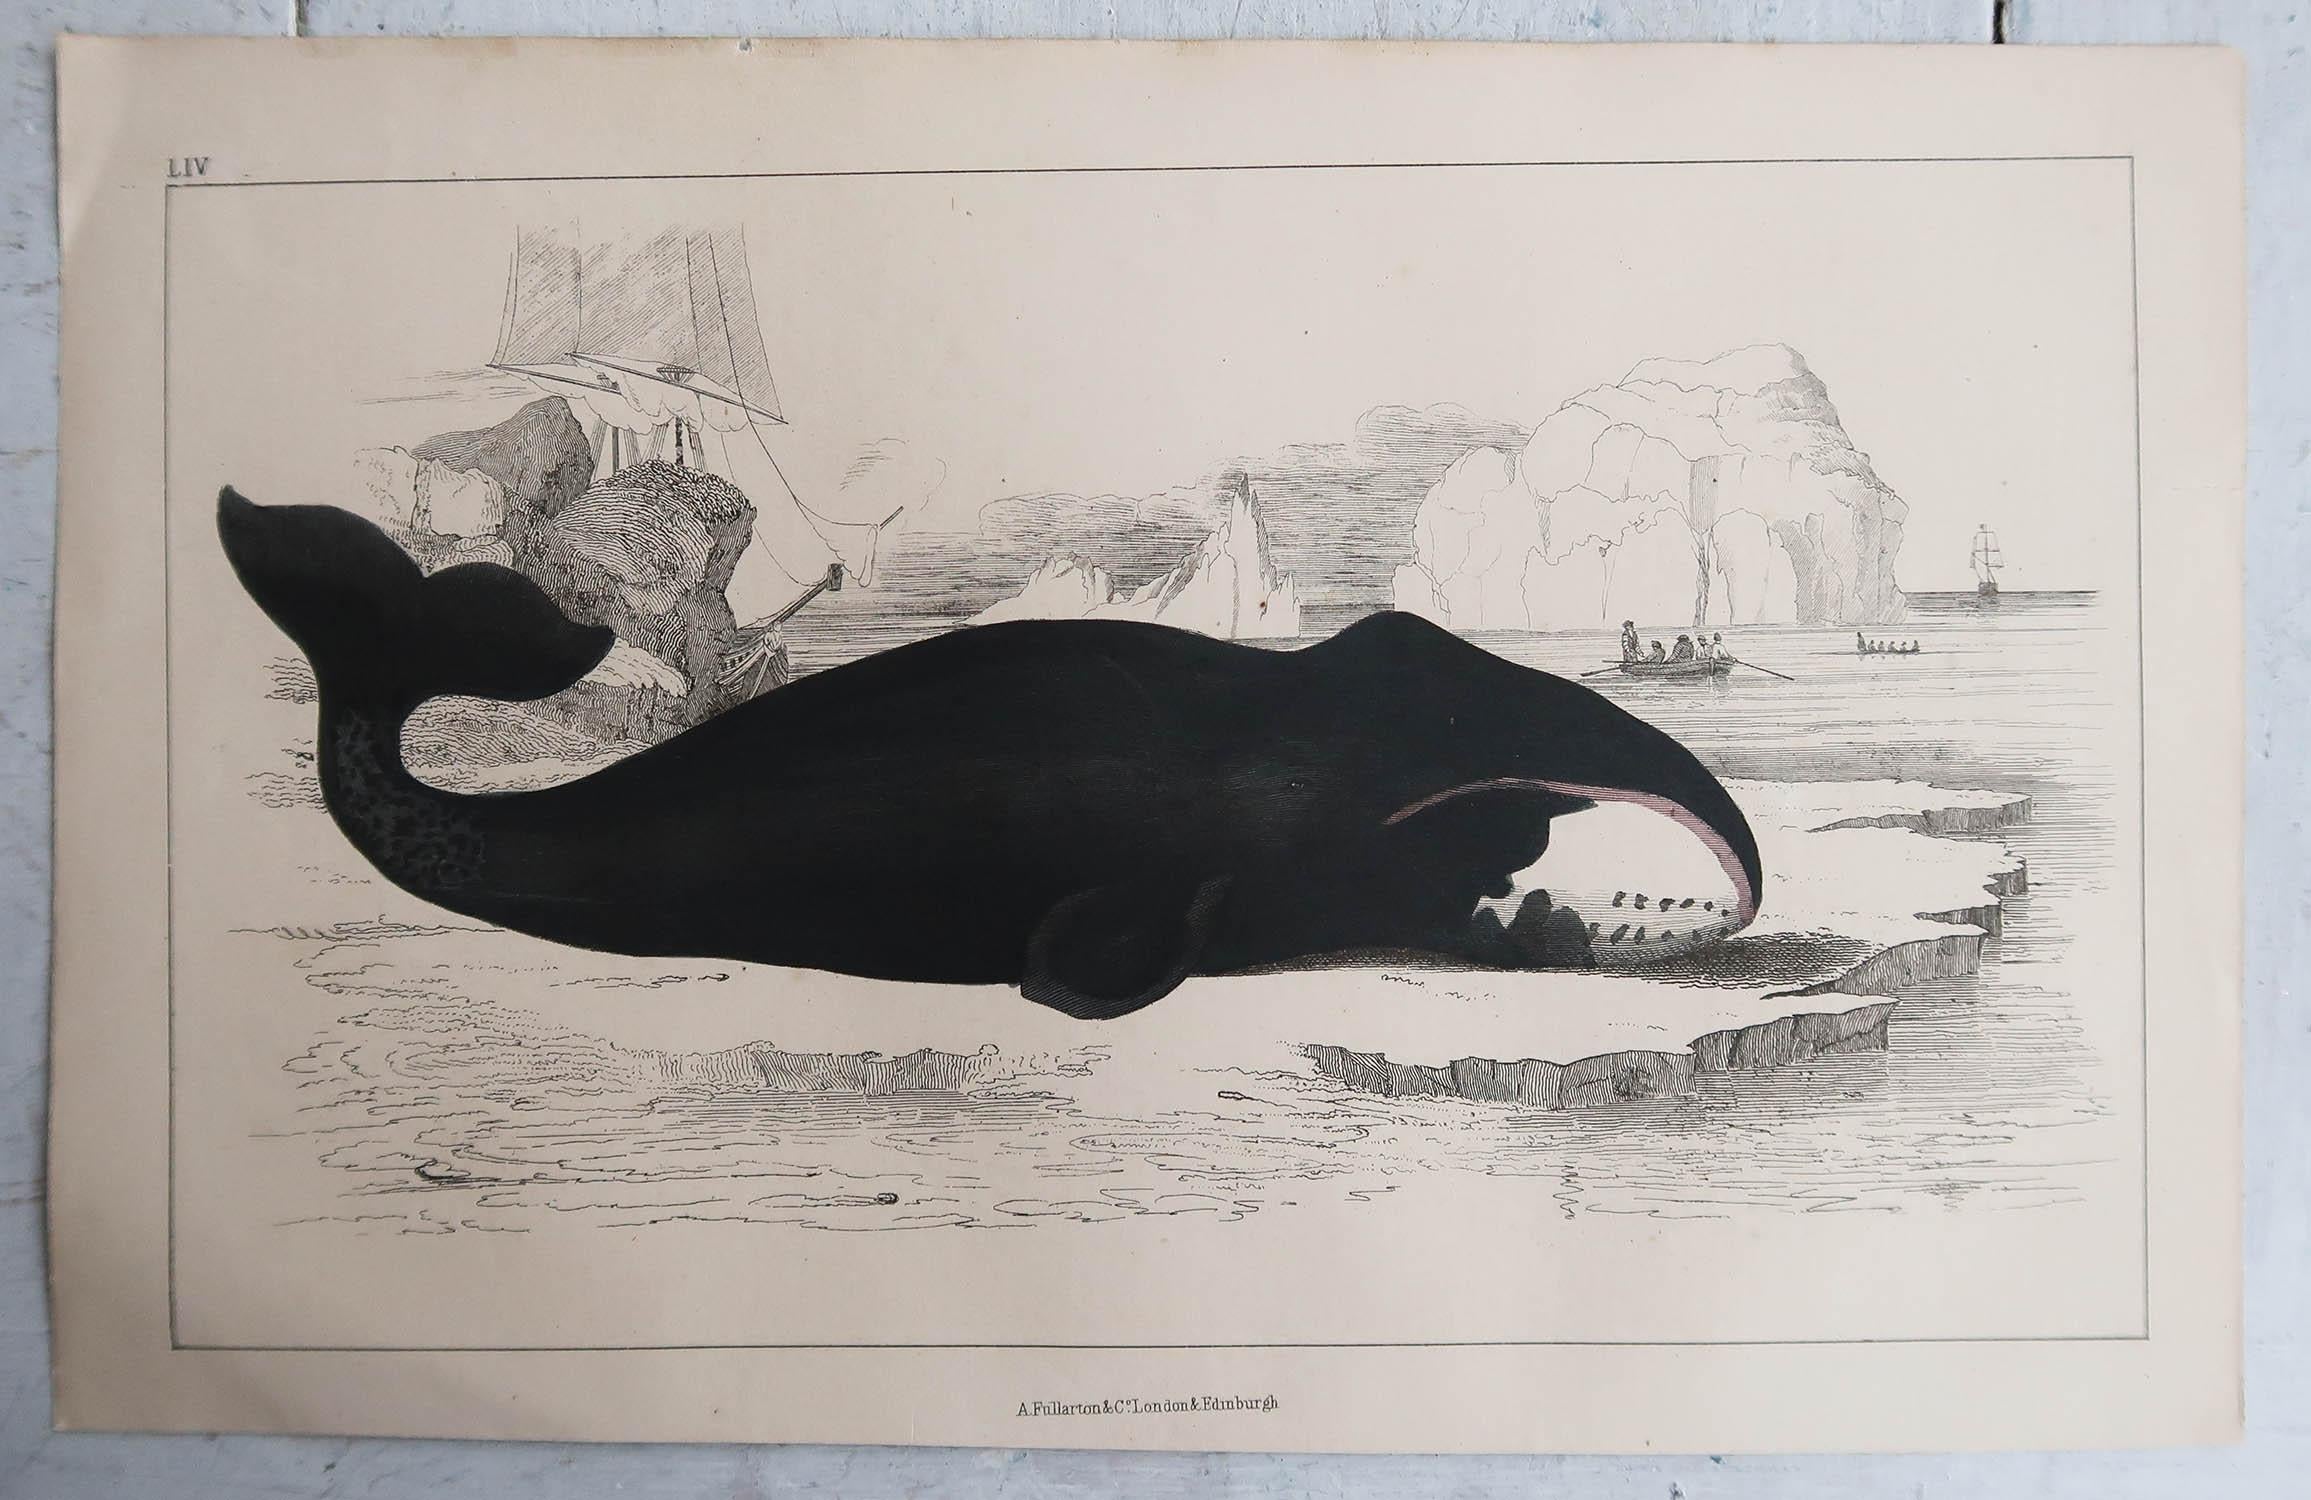 Folk Art Original Antique Print of a Whale, 1847 'Unframed' For Sale